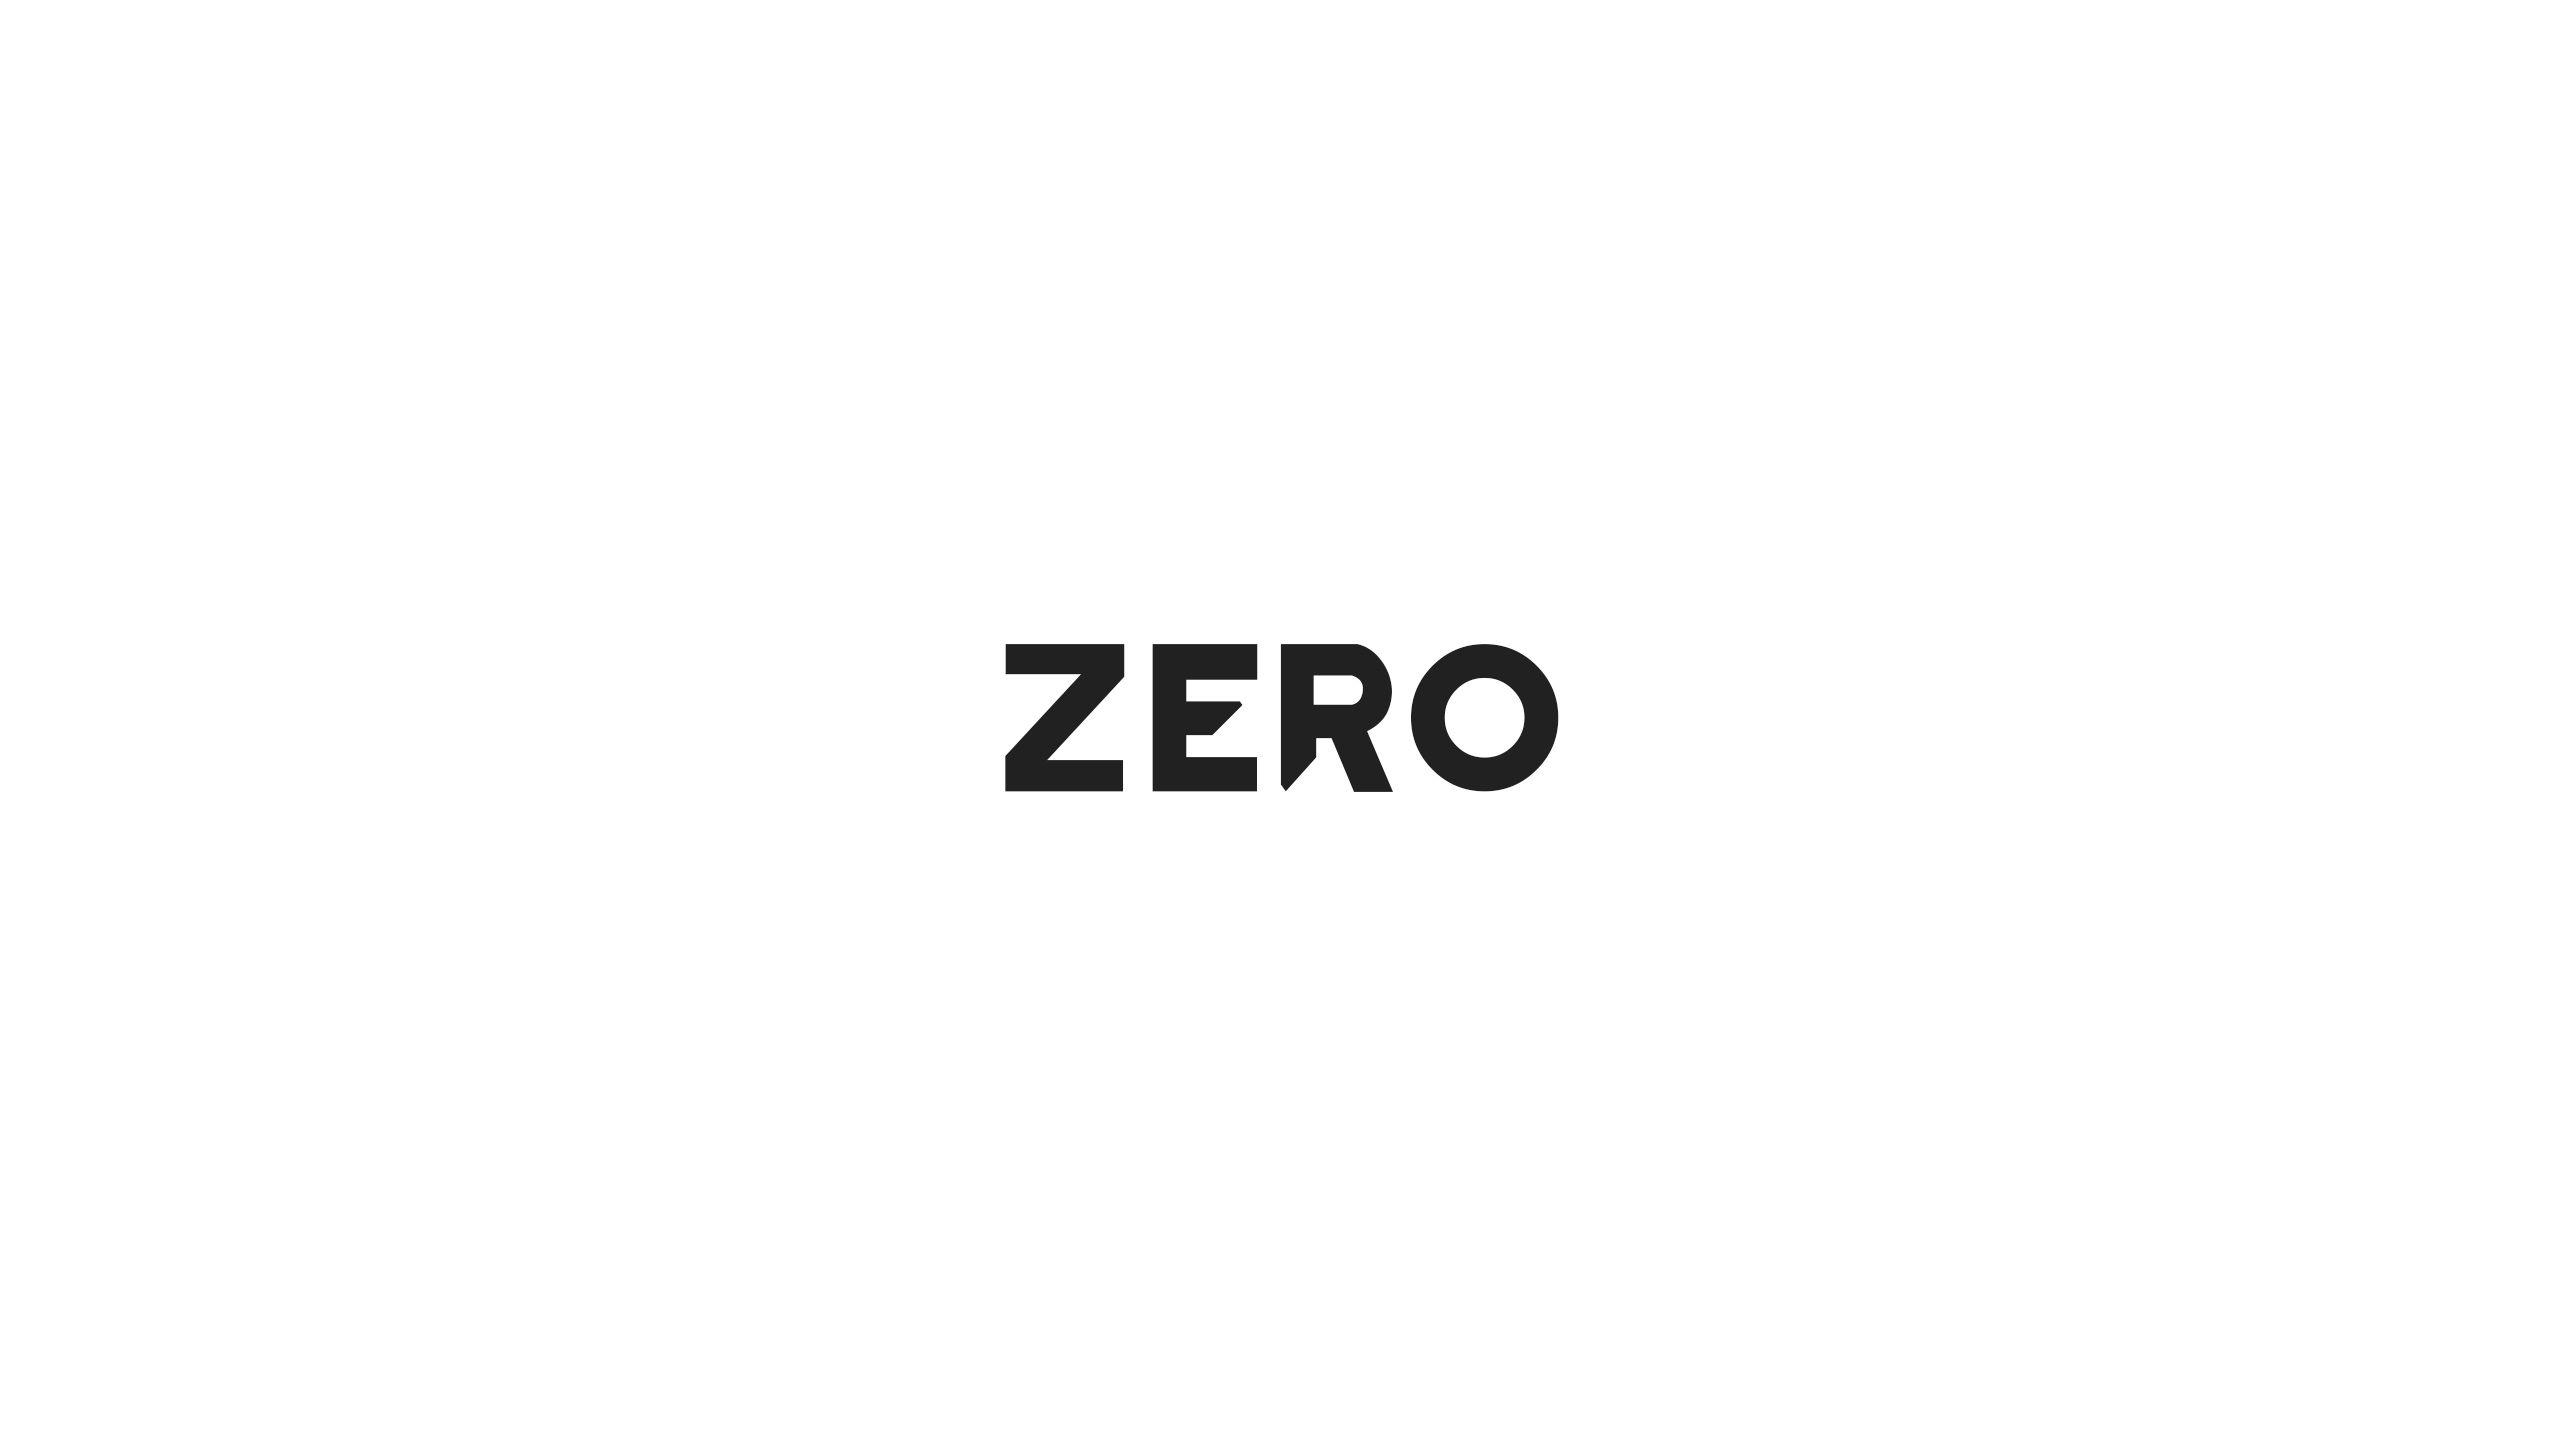 Zero Logo - File:Zero LOGO.jpg - Wikimedia Commons